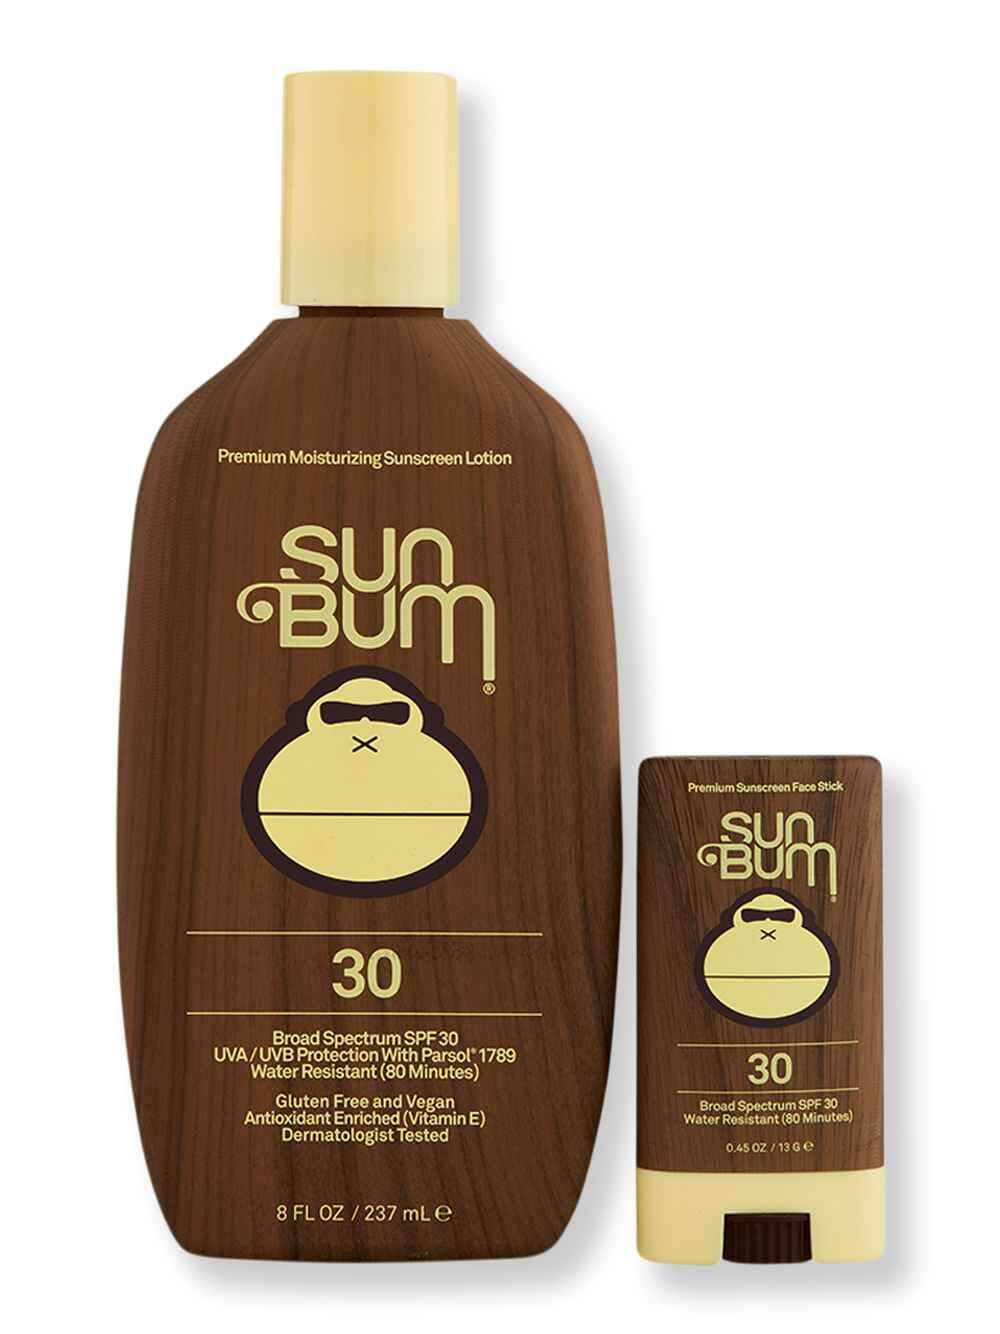 Sun Bum Sun Bum Original SPF 30 Sunscreen Lotion 8 oz & Face Stick 0.45 oz Body Sunscreens 